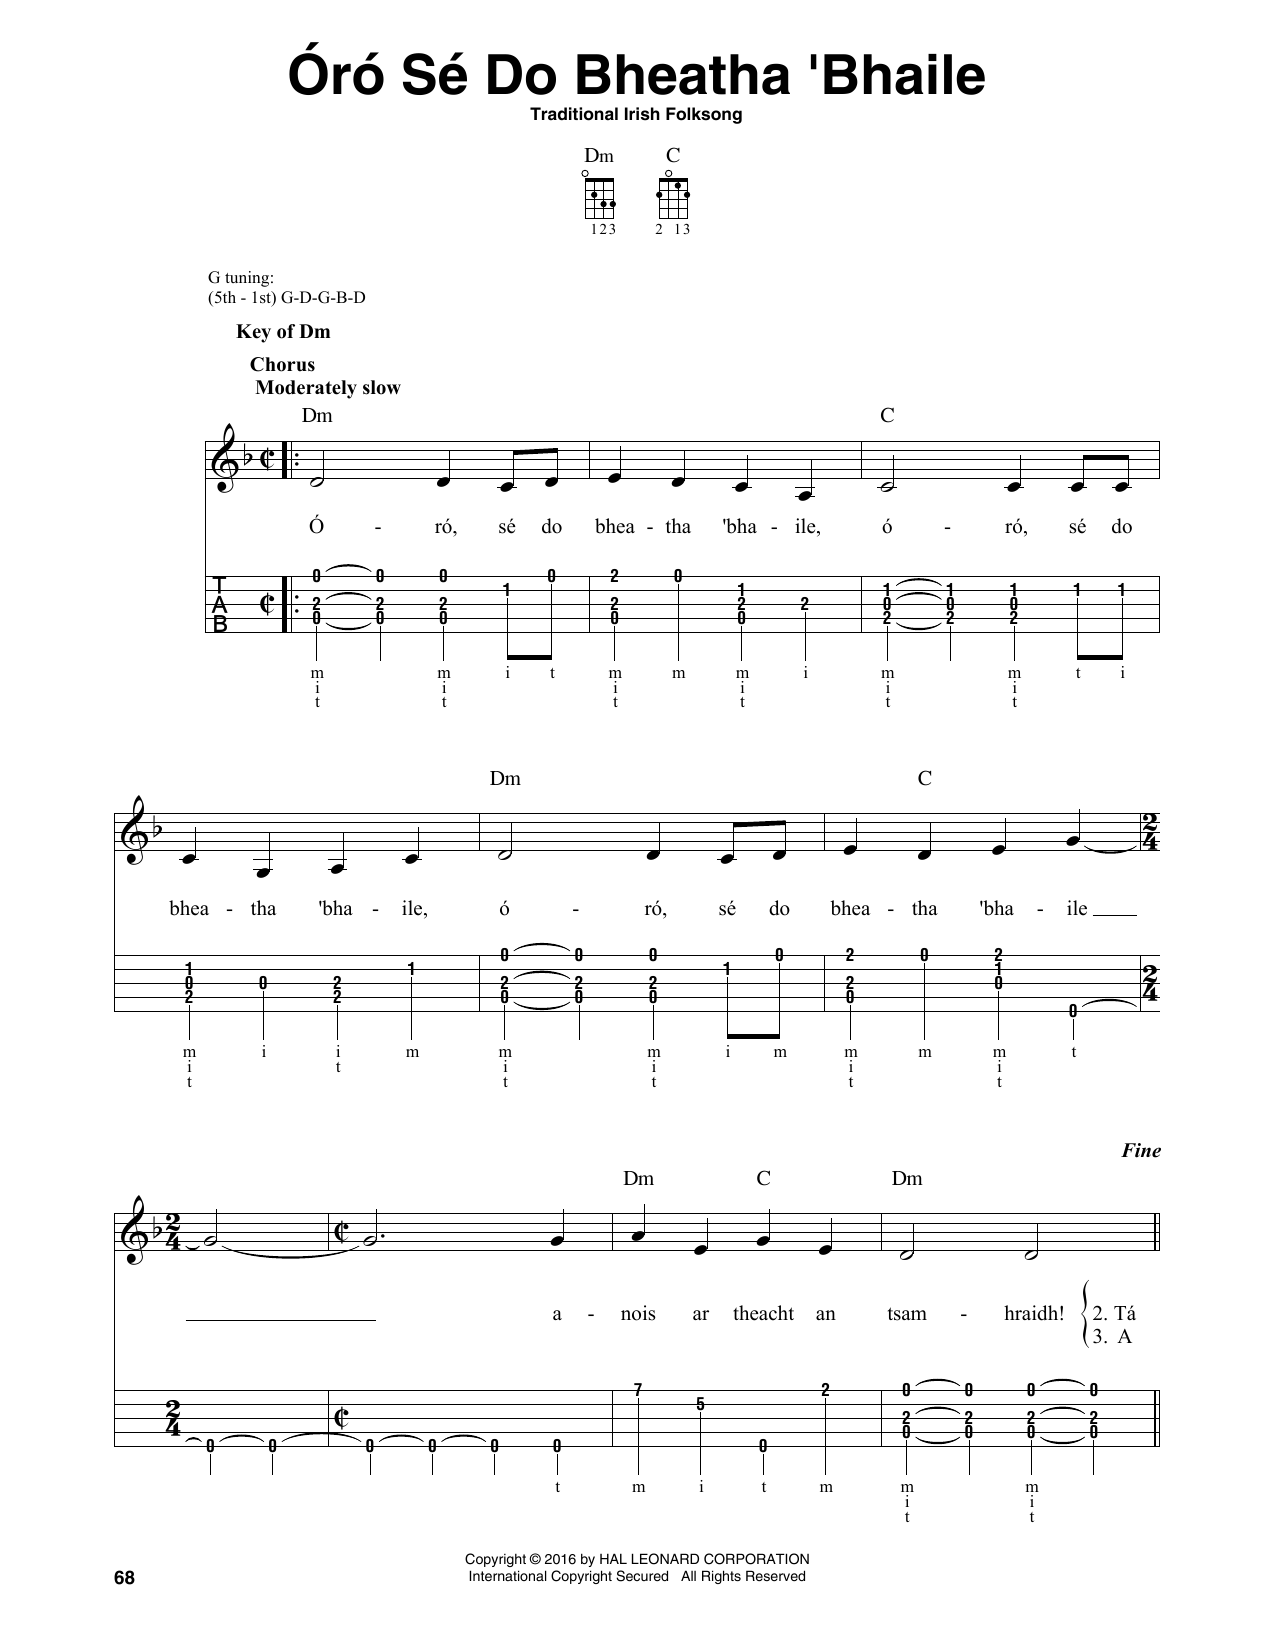 Traditional Irish Folk Song Oro Se Do Bheatha Bhaile Sheet Music Notes & Chords for Banjo - Download or Print PDF